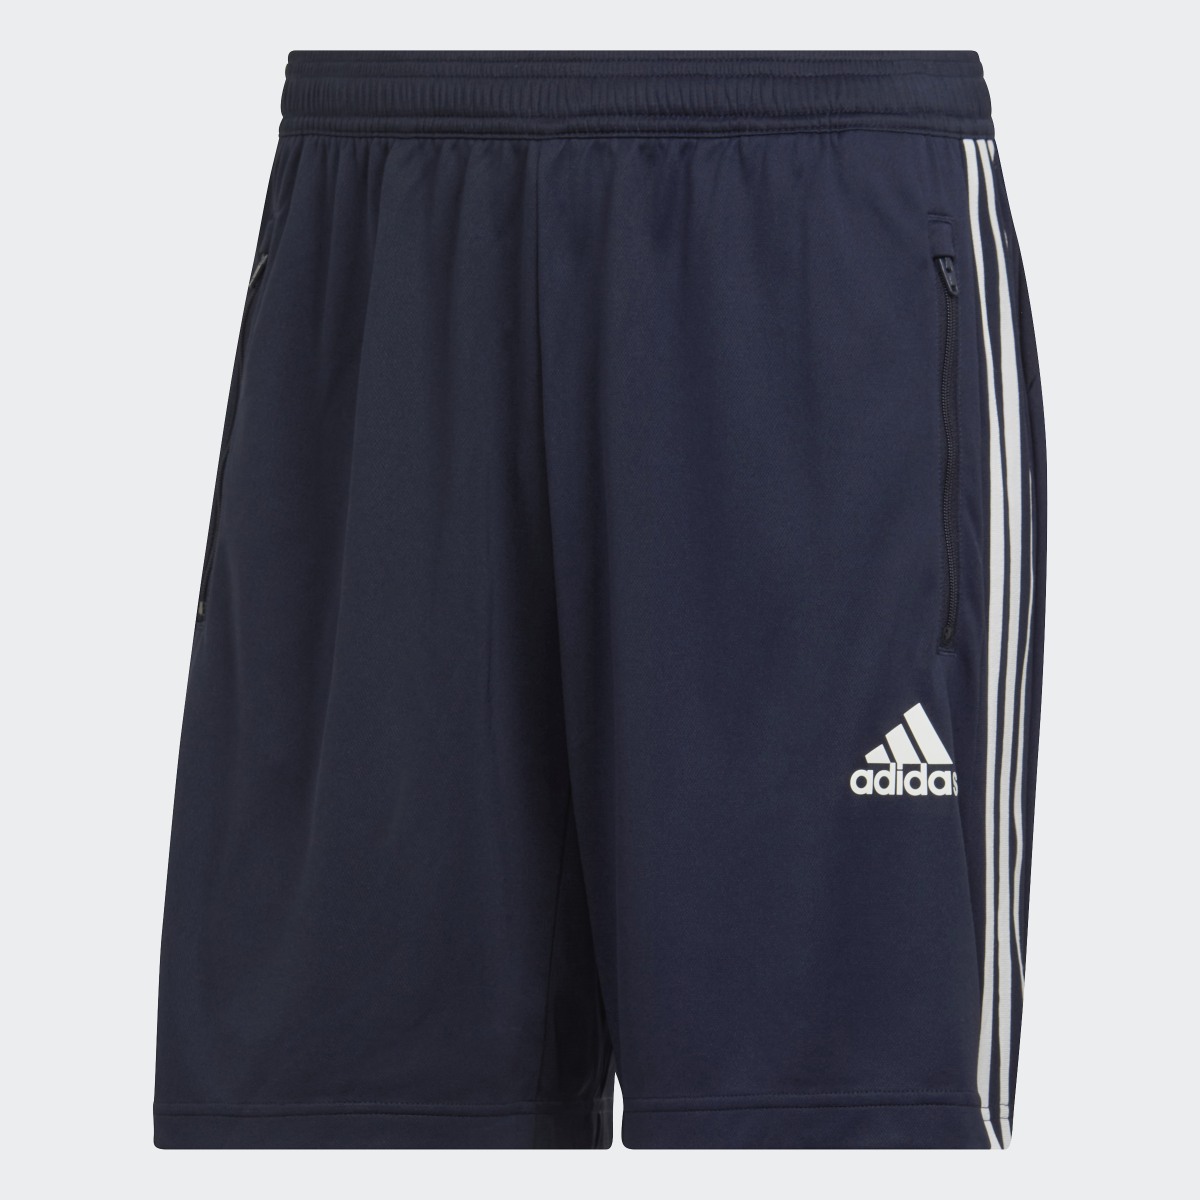 Adidas Primeblue Designed to Move Sport 3-Stripes Shorts. 4